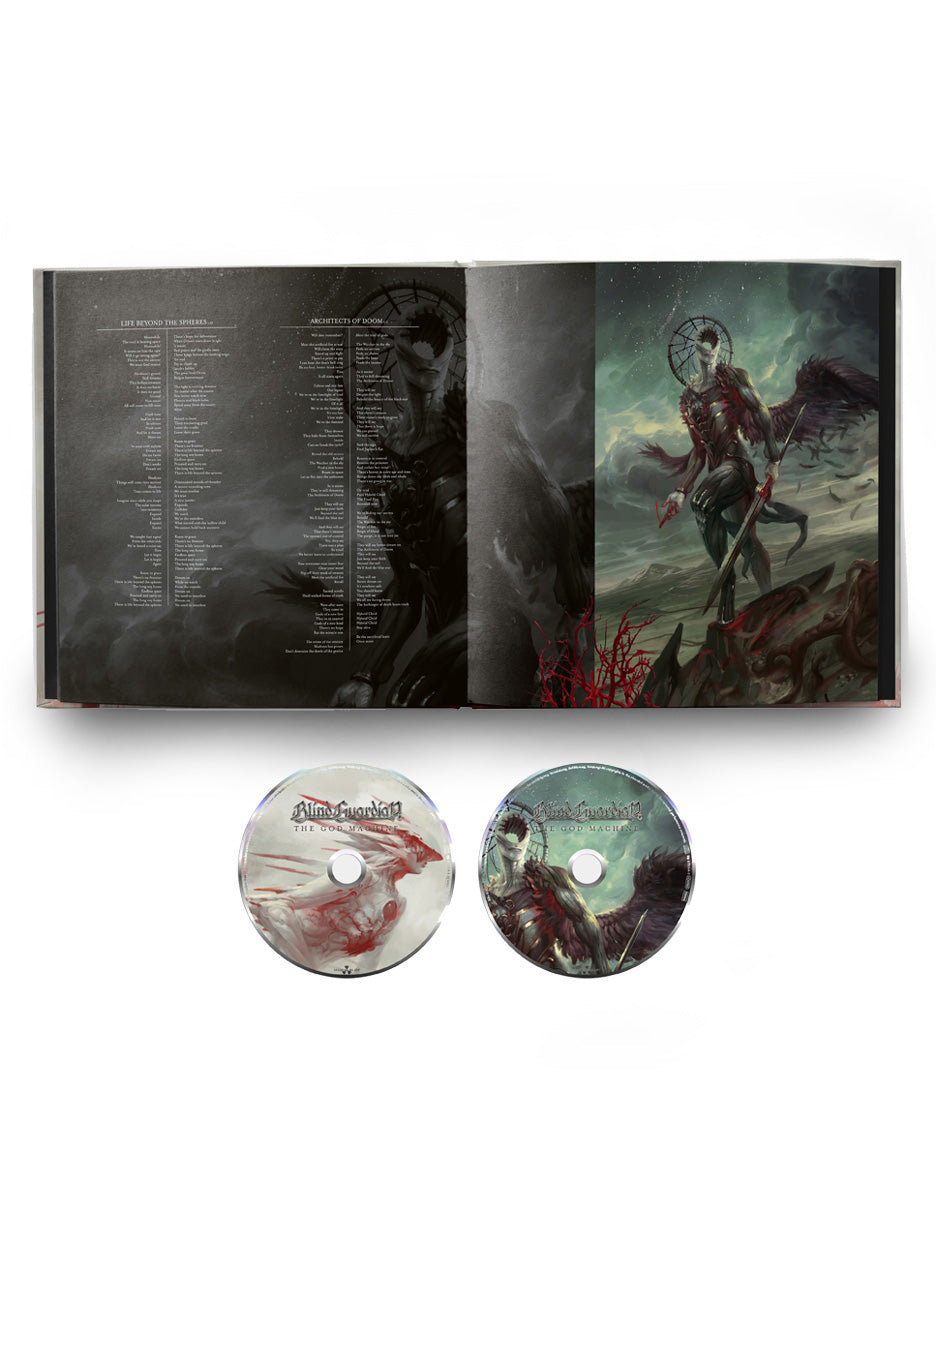 Blind Guardian - The God Machine Ltd - Earbook 2 CD